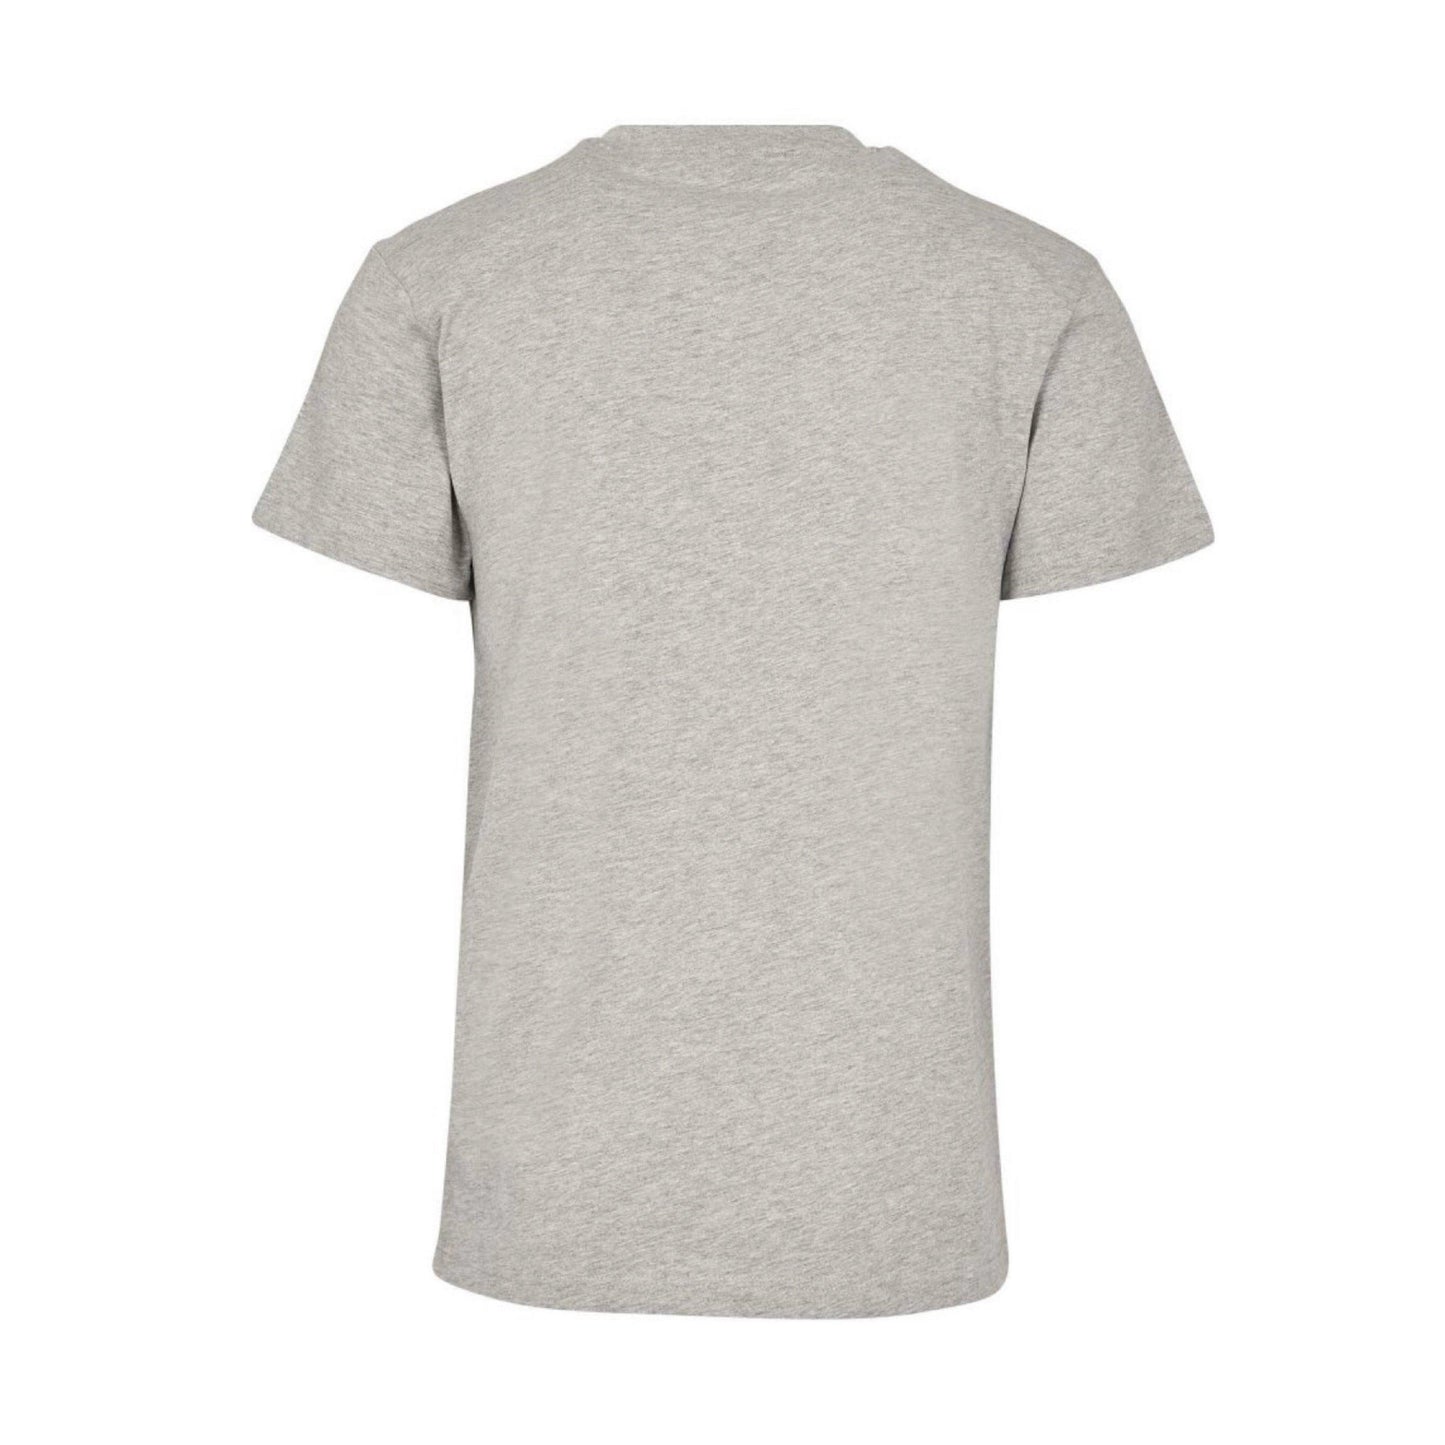 Premium Basic Shirt Grey 190 g/m² - DMANERA Atelier